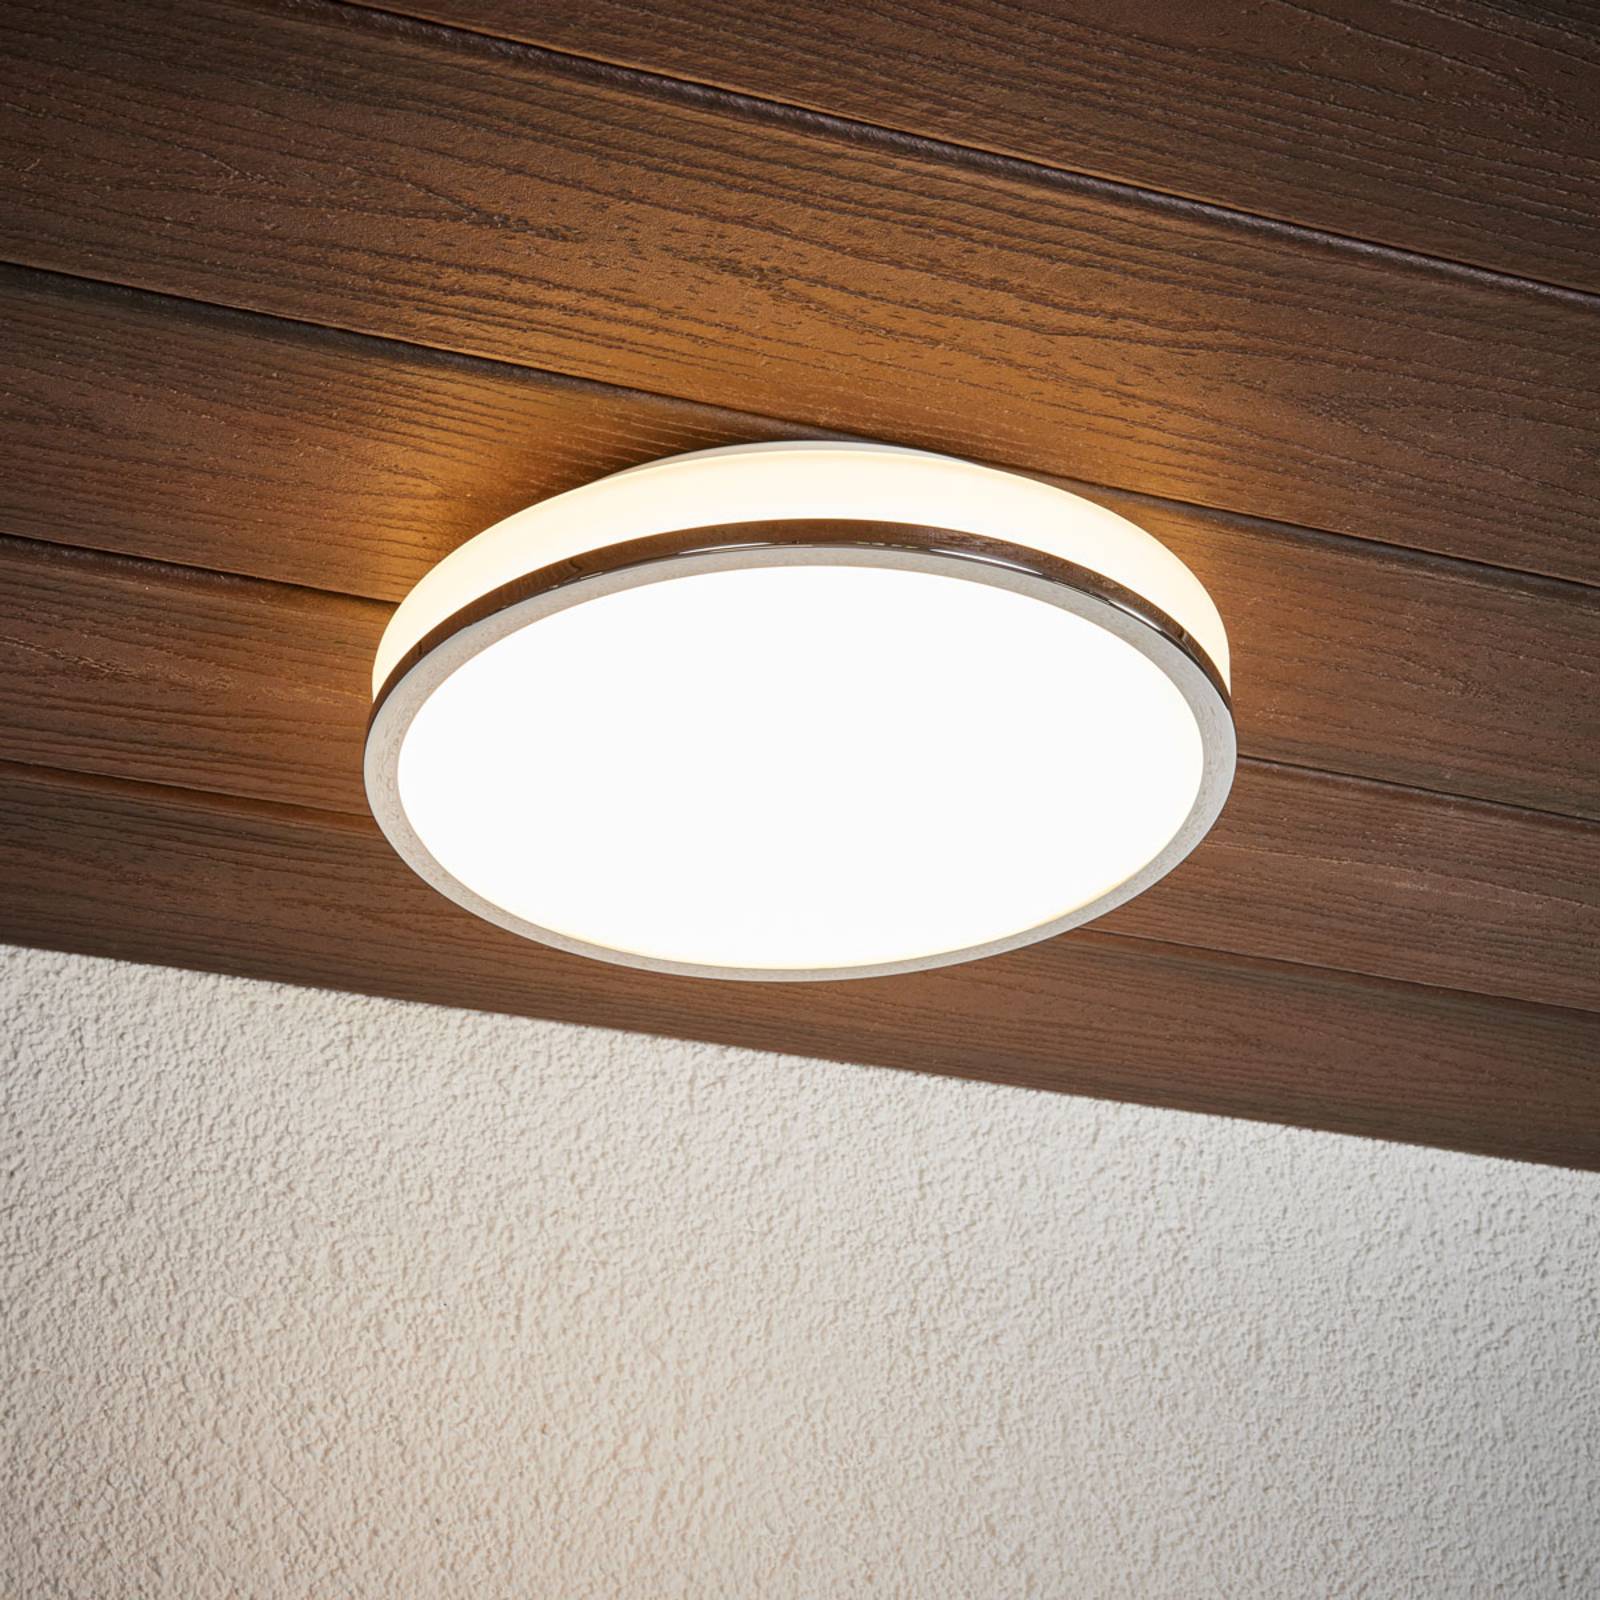 Ronde LED plafondlamp Lyss met chromen rand, IP44